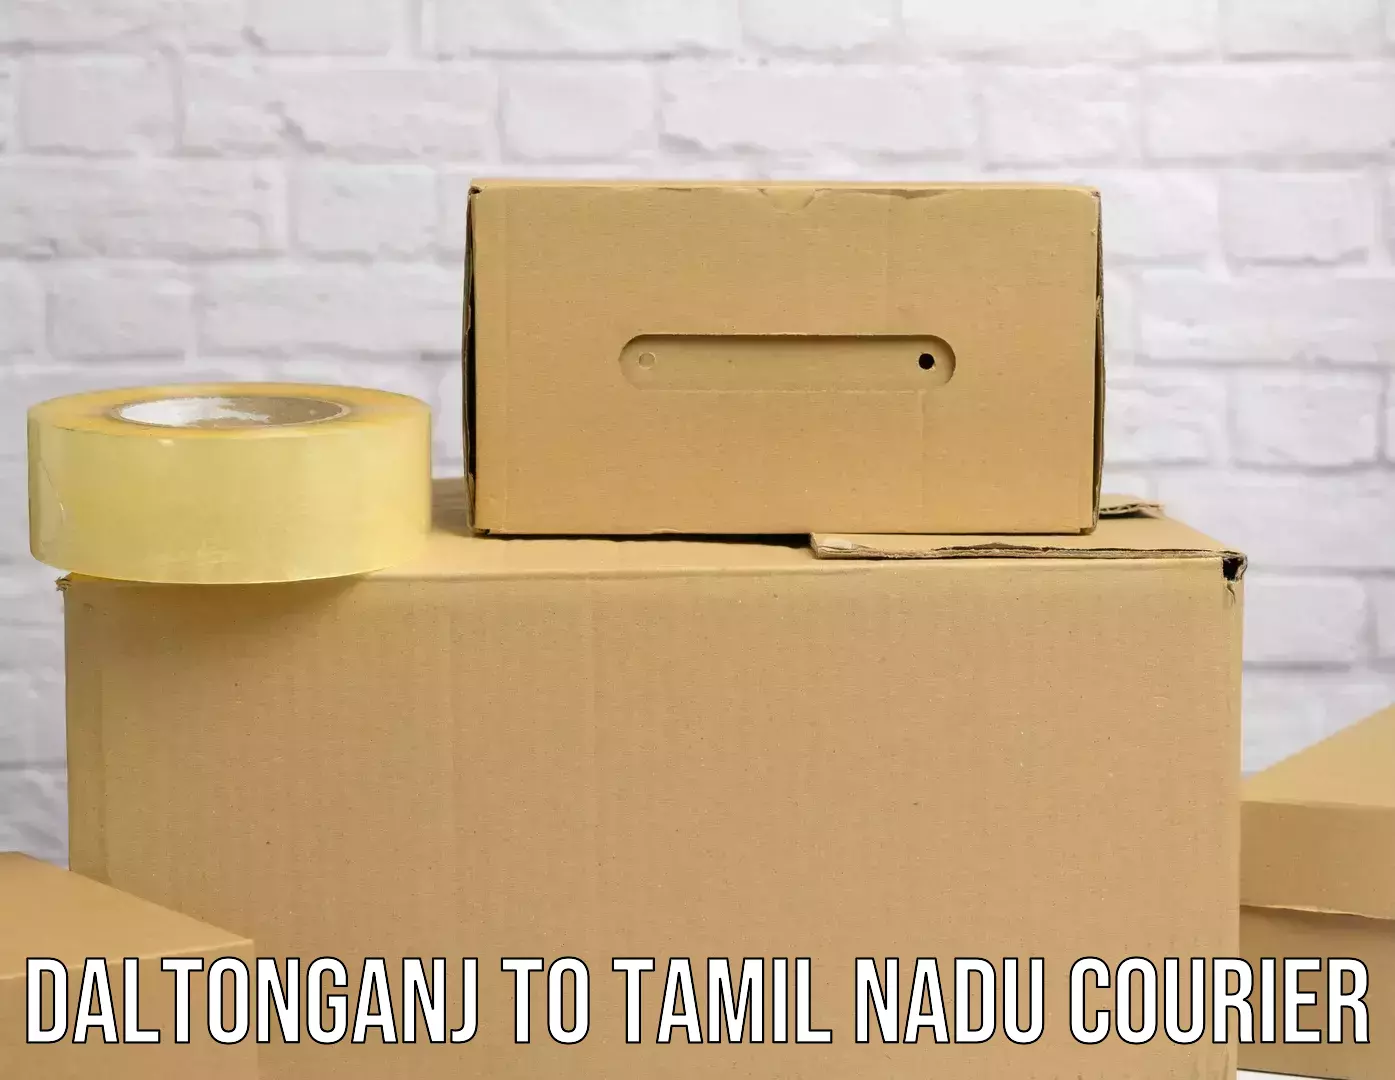 Global shipping networks Daltonganj to Tamil Nadu